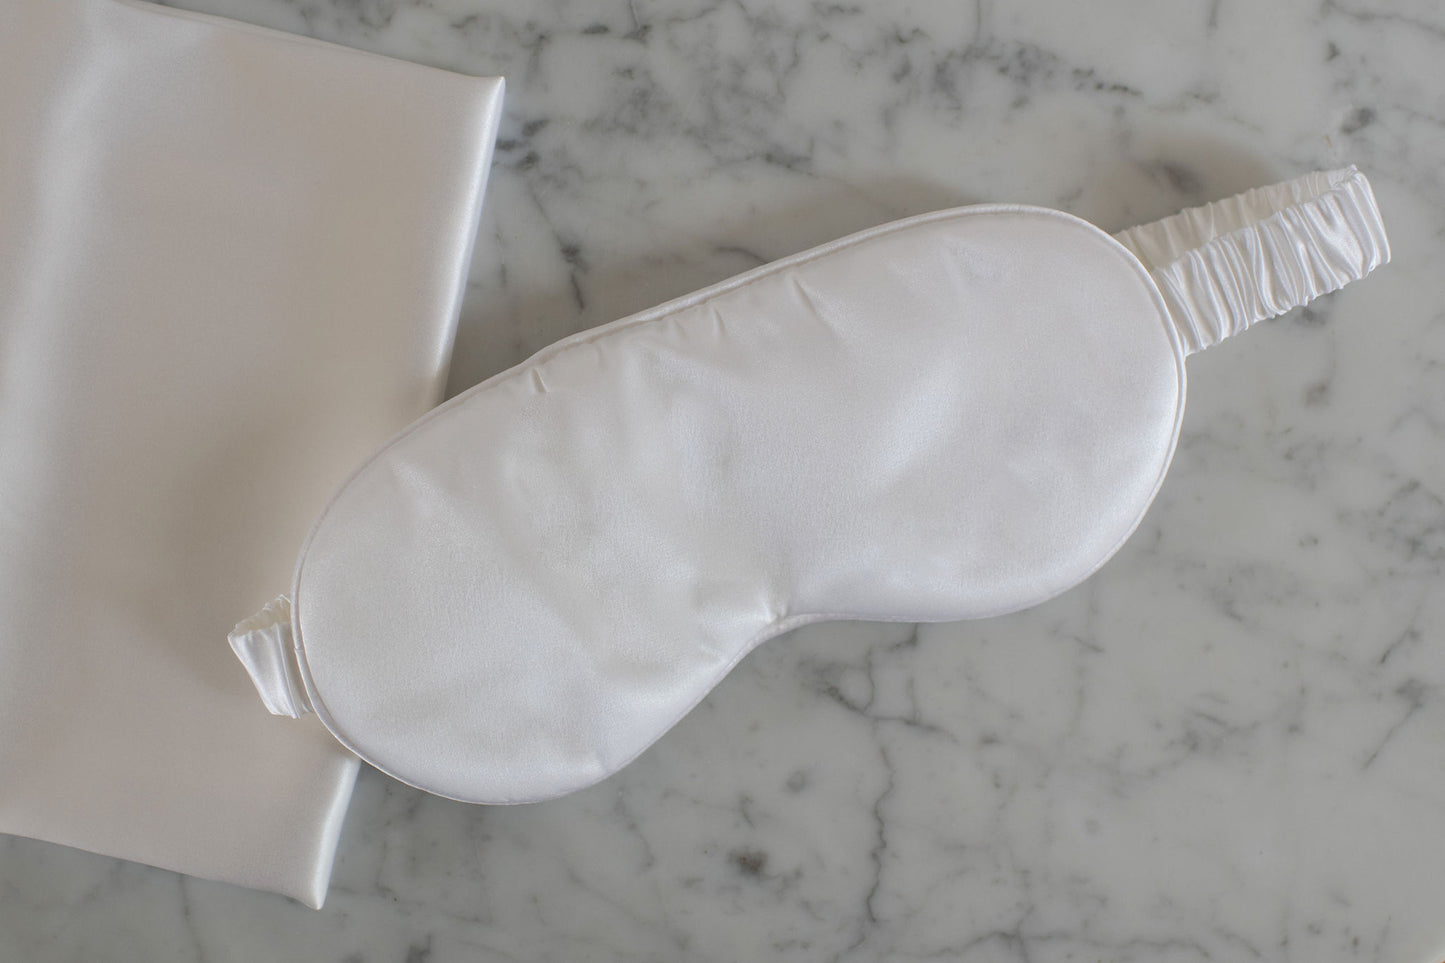 White Rose - LIMITED EDITION - Luxury Silk Sleep Mask